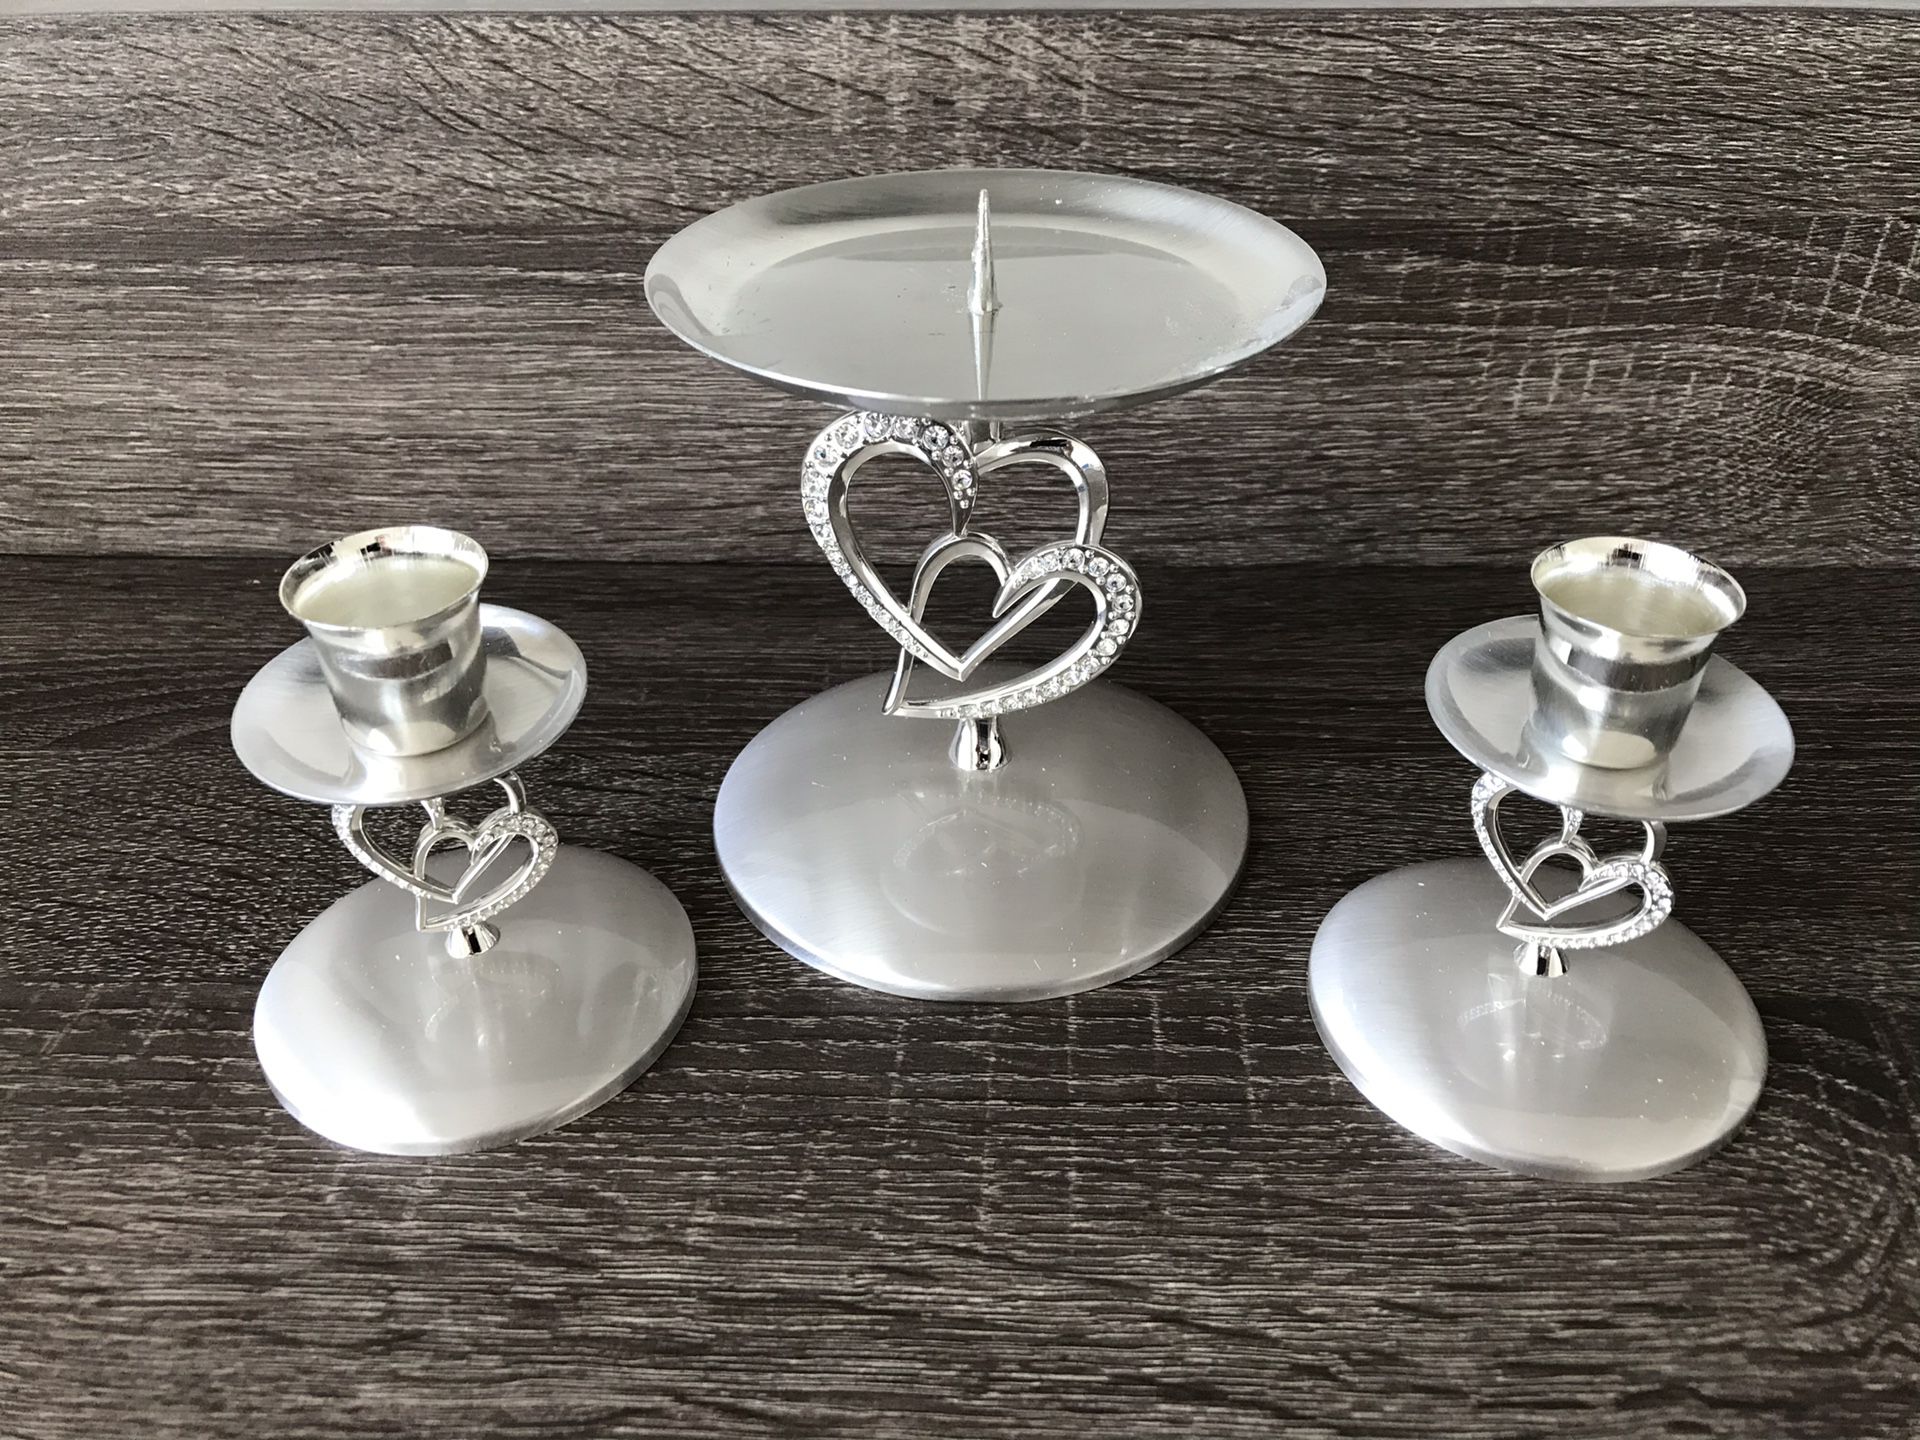 David’s Bridal candle holders